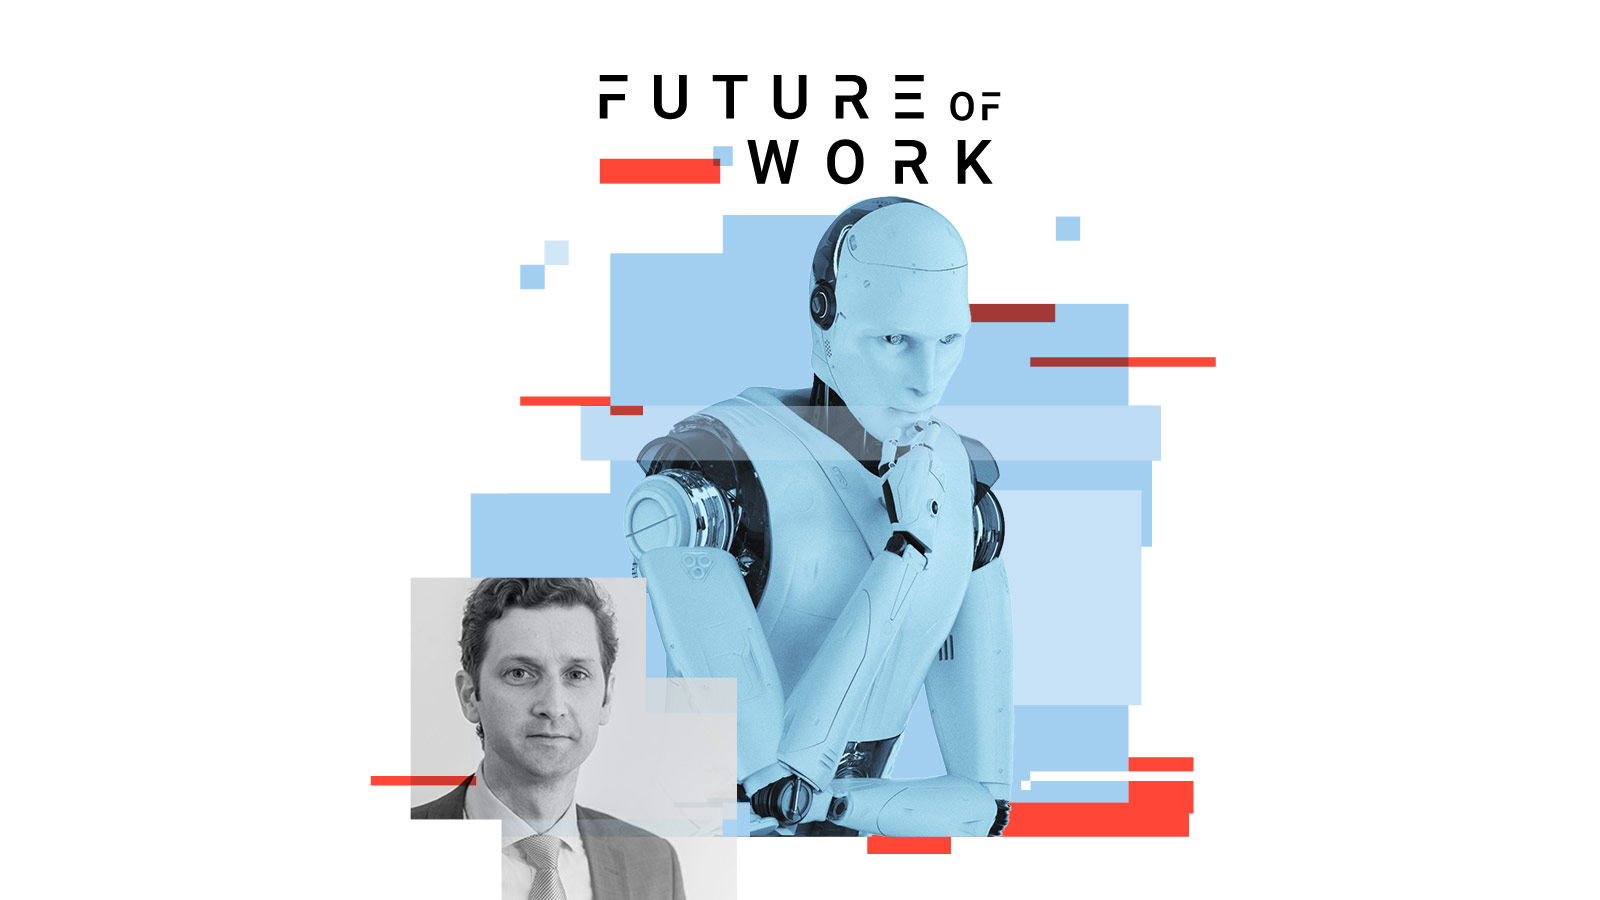 imc future of work